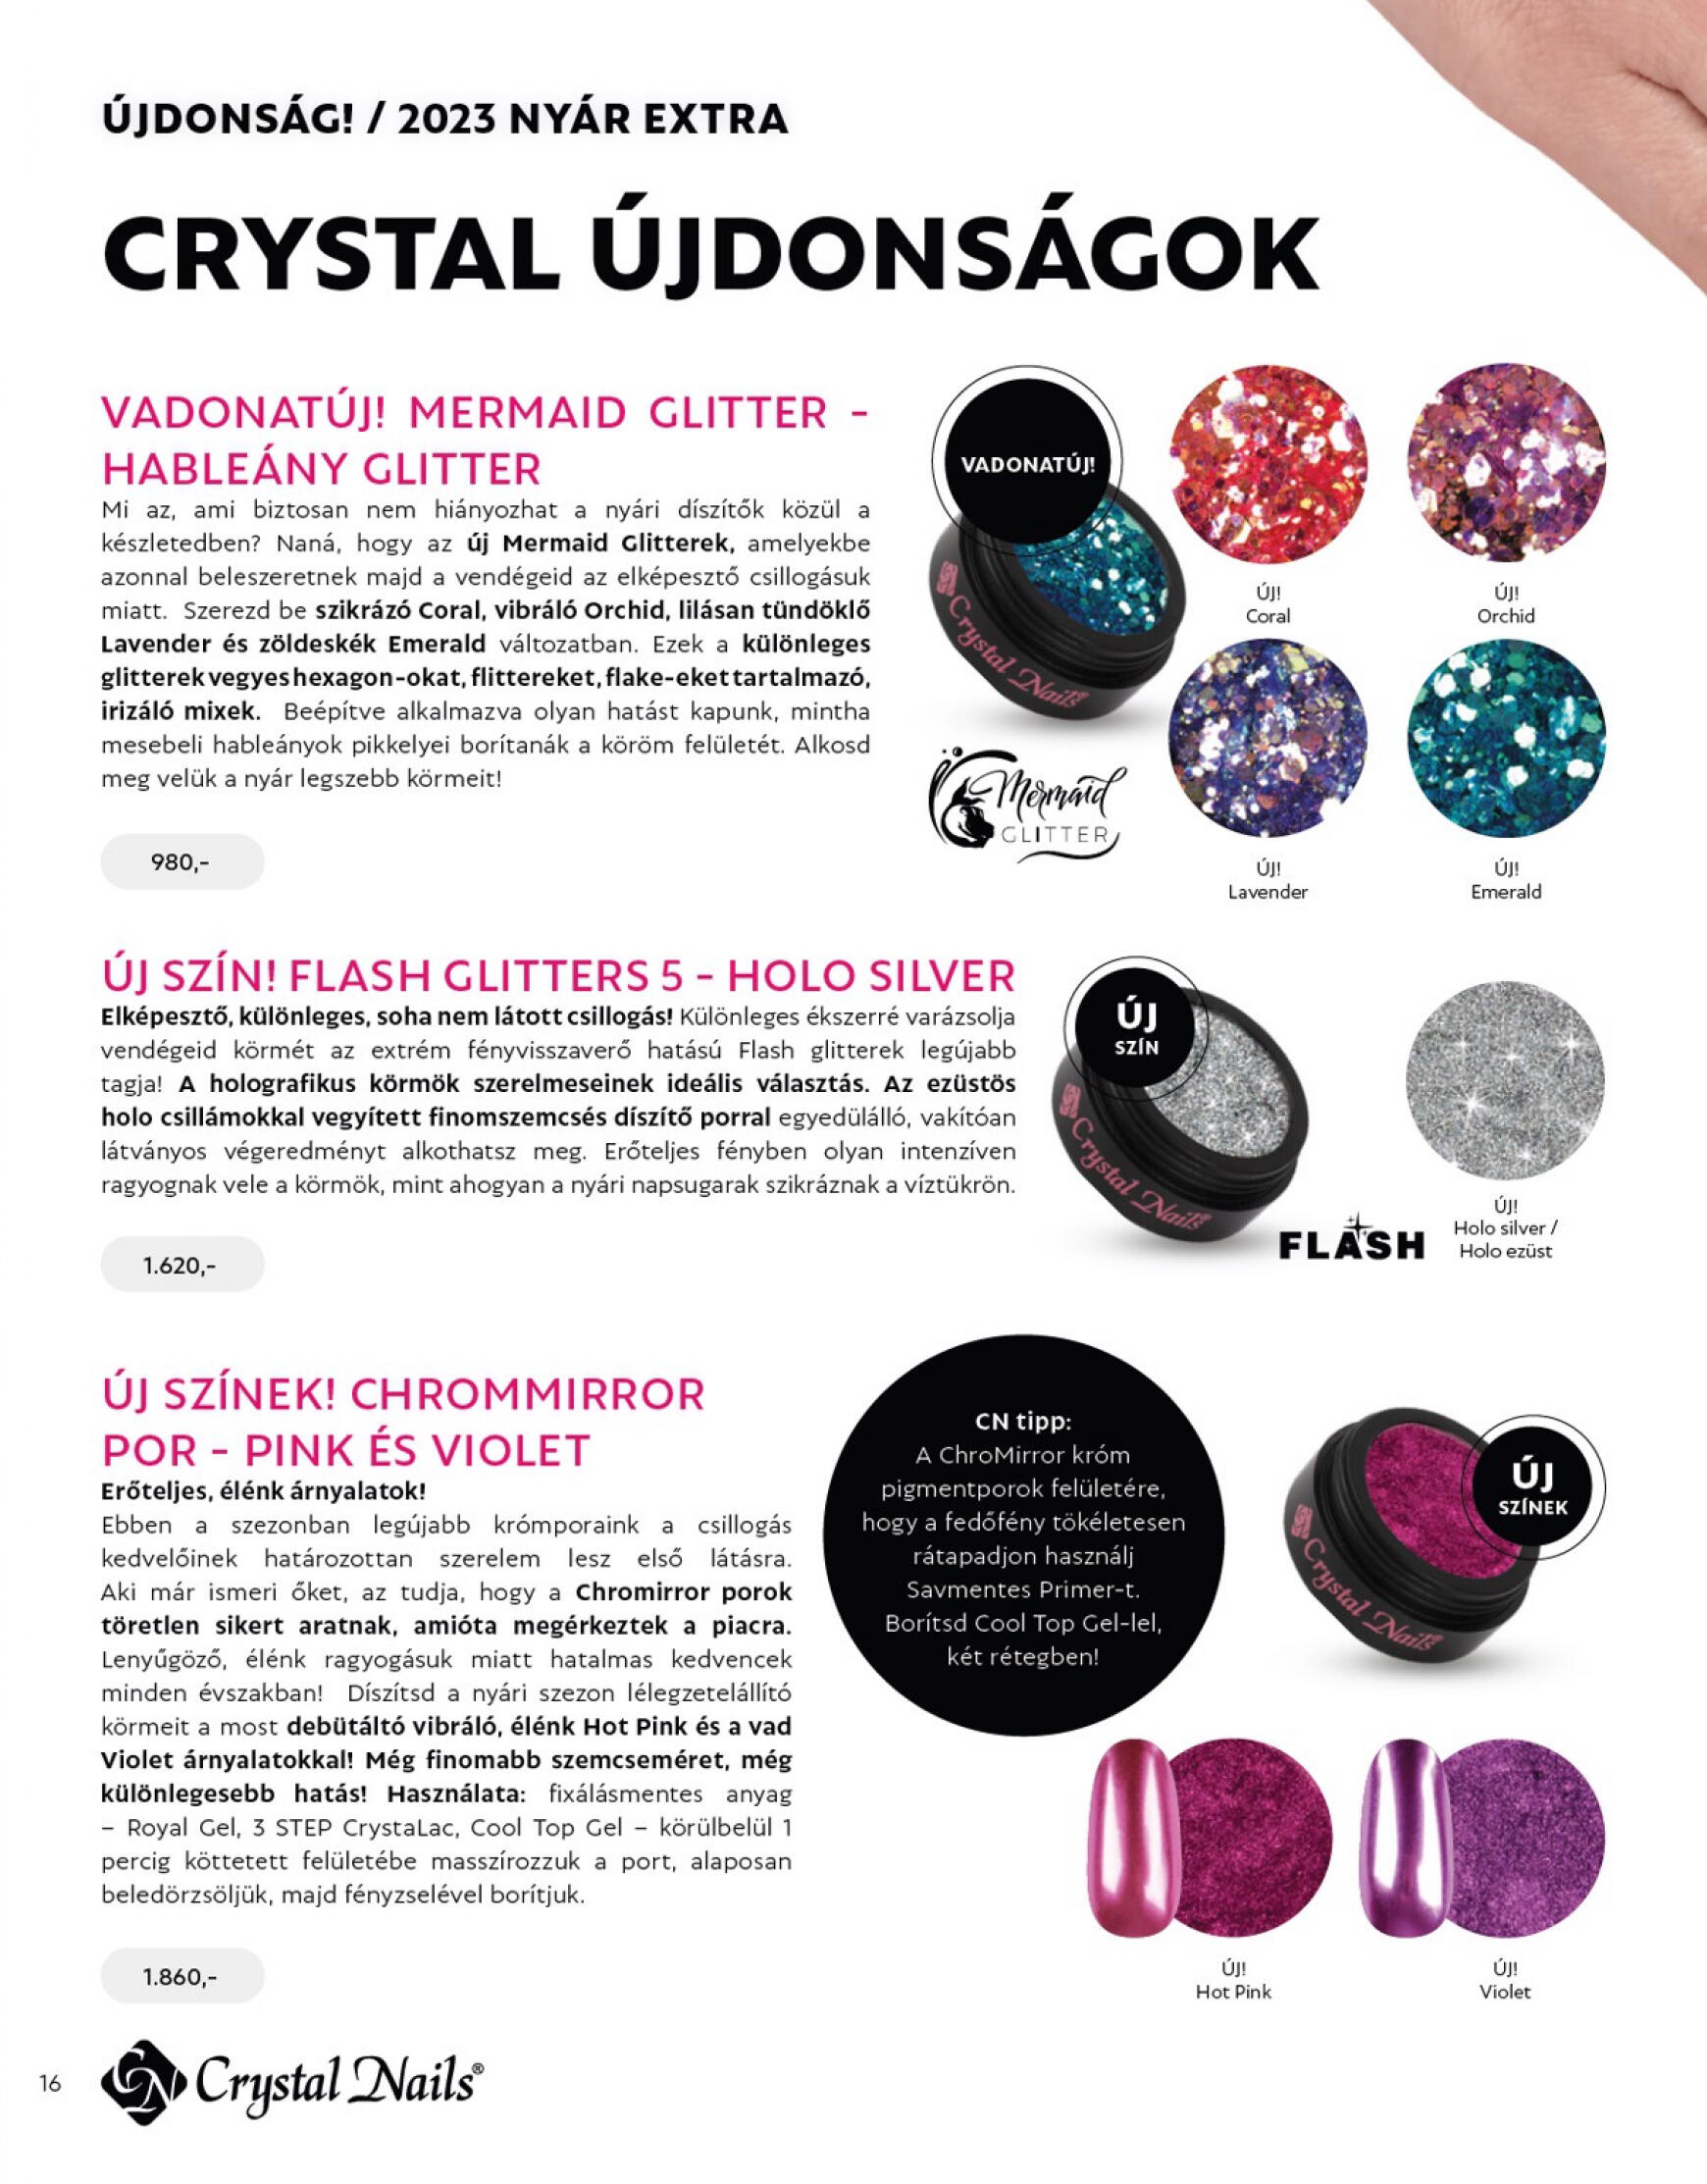 crystal-nails - Crystal Nails 2023 NYÁR EXTRA katalógus - page: 16